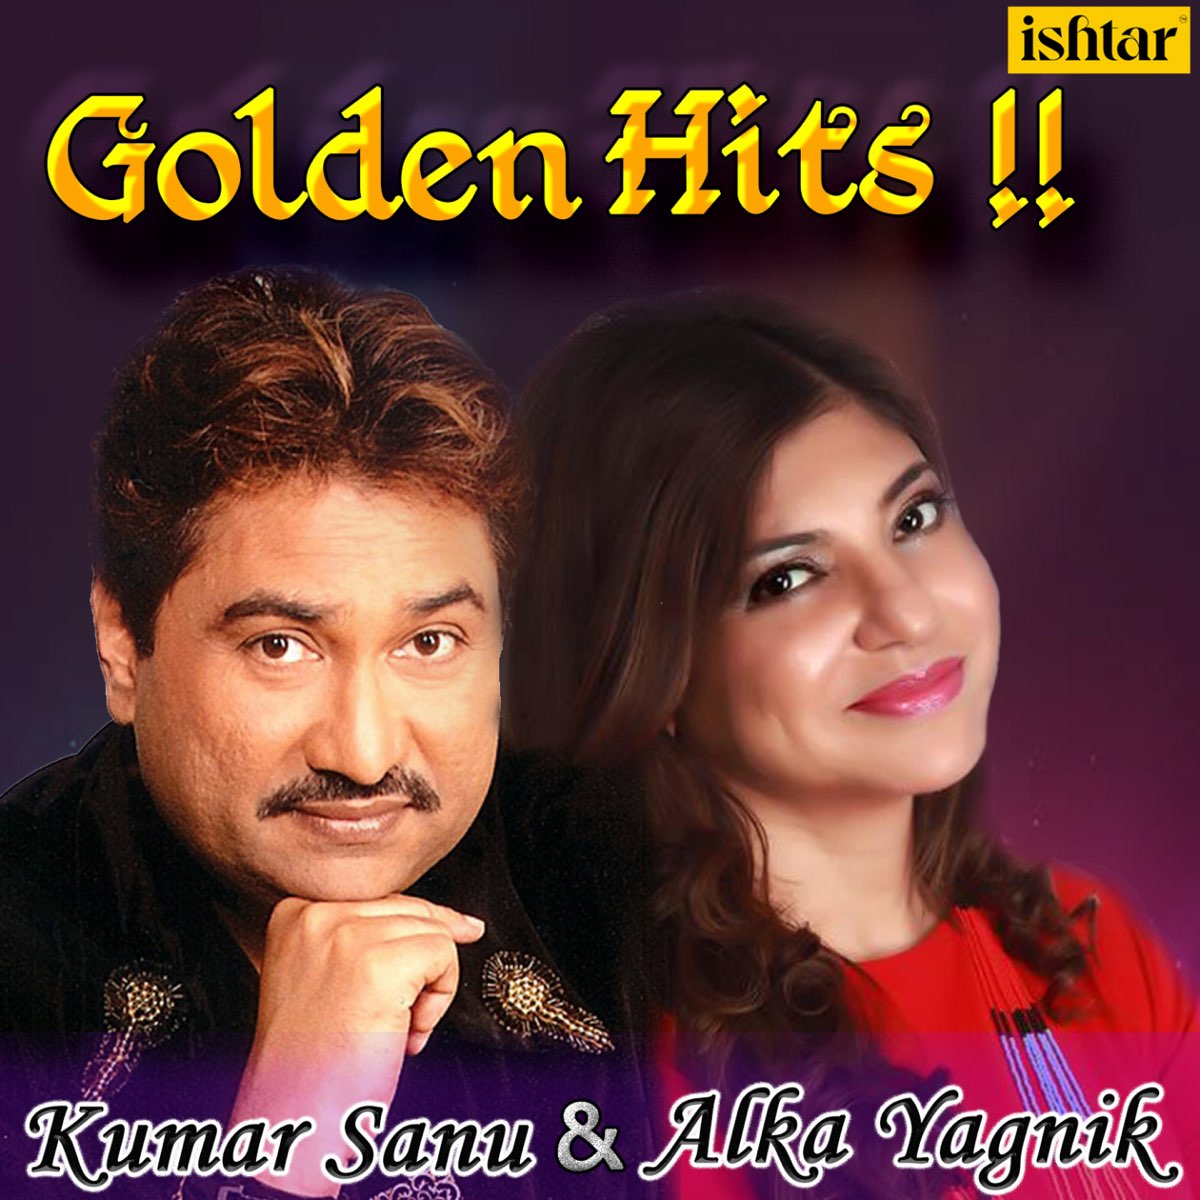 Golden Hits (Kumar Sanu and Alka Yagnik) - Album by Kumar Sanu and Alka Yagnik  pic